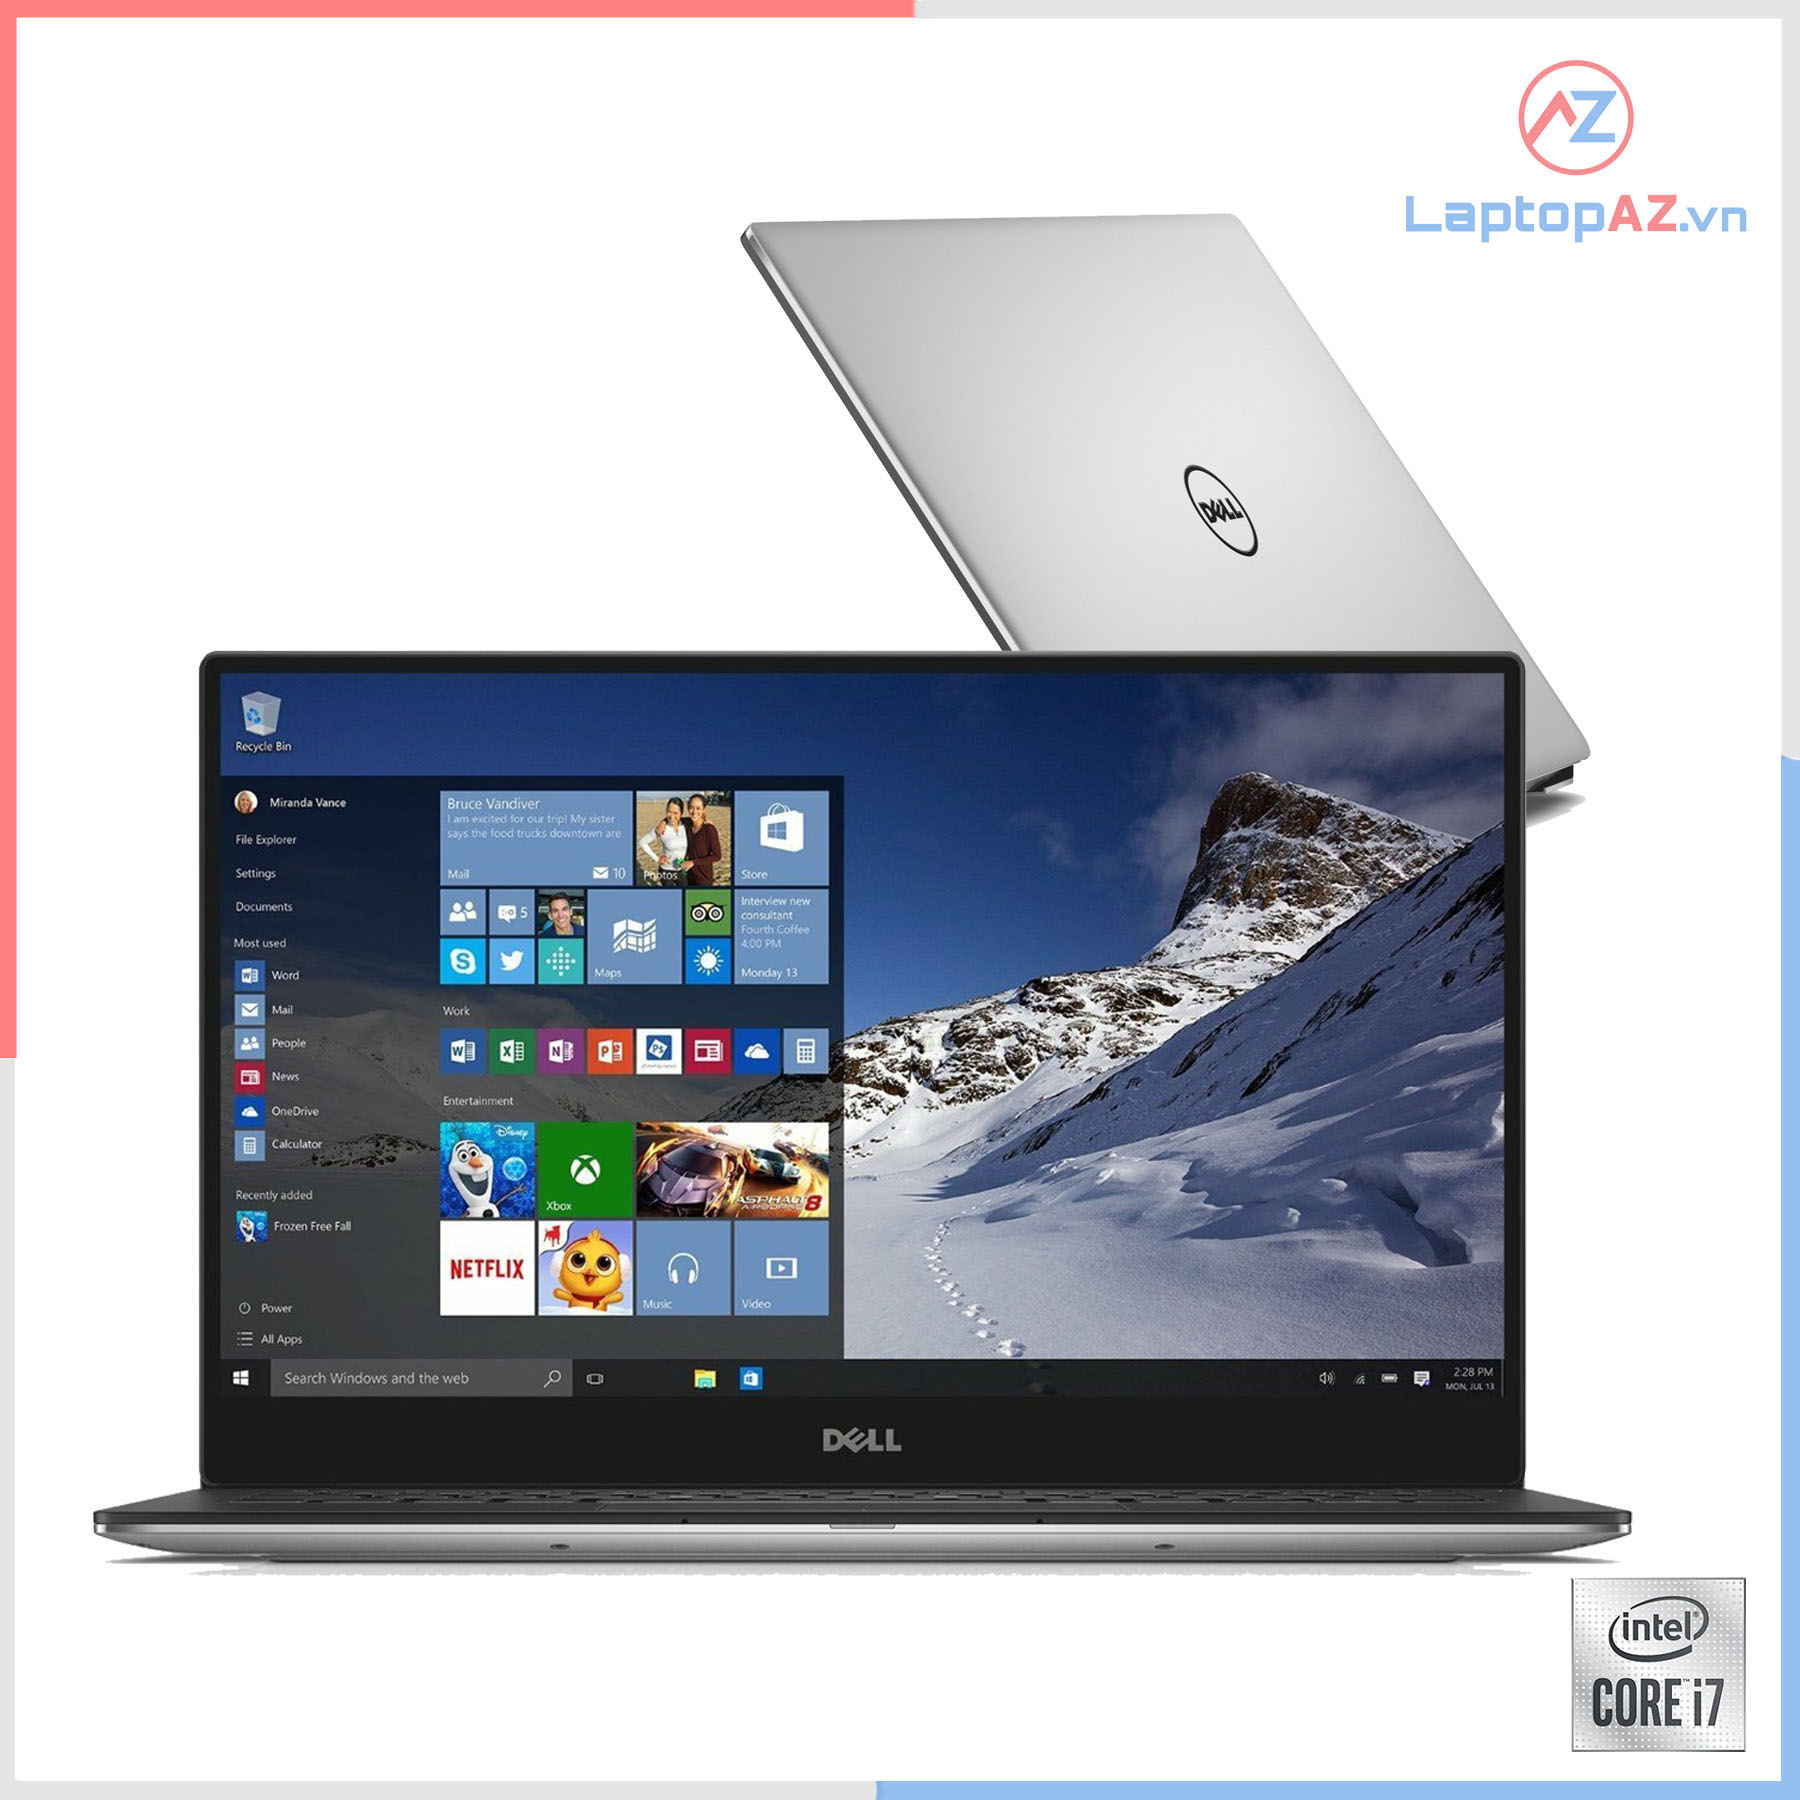 Laptop Dell XPS 13-9343 (Core i7-5500U, 8GB, 256GB, VGA Intel HD Grapics 5500, 13.3 inch FHD IPS)